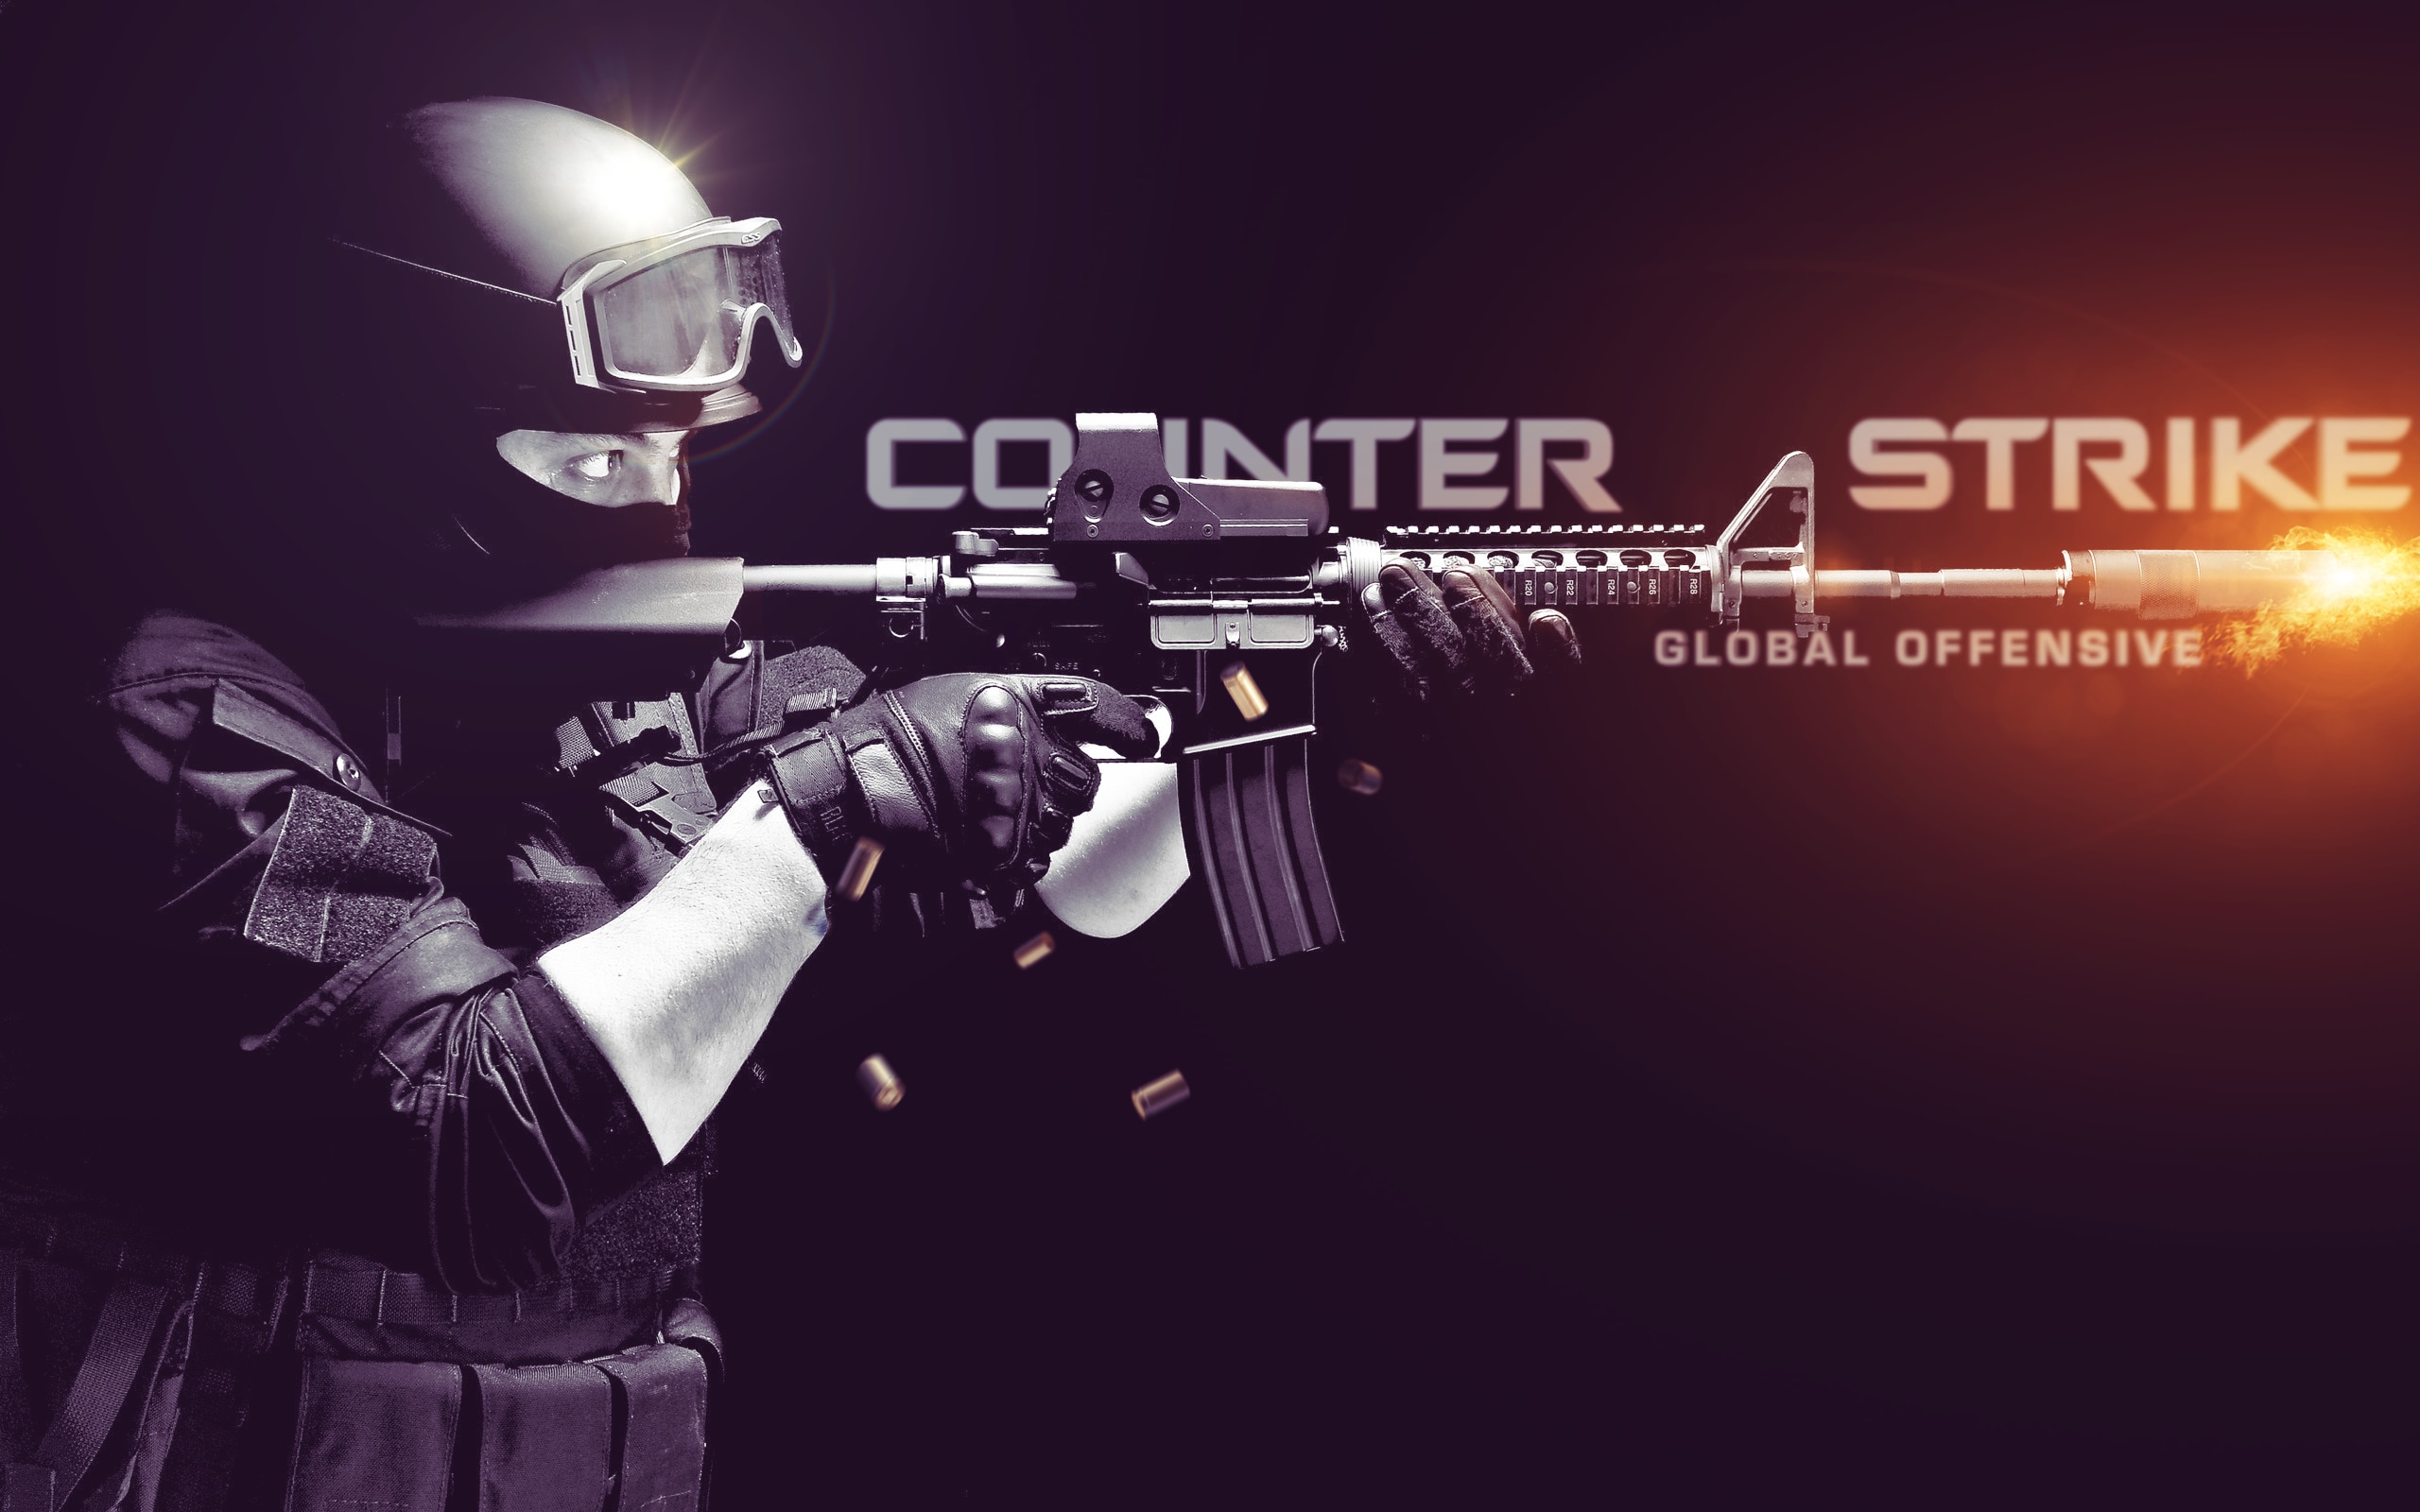 Counter-Strike 1.6 vs. Counter-Strike 2.0 - All Weapons Comparison 